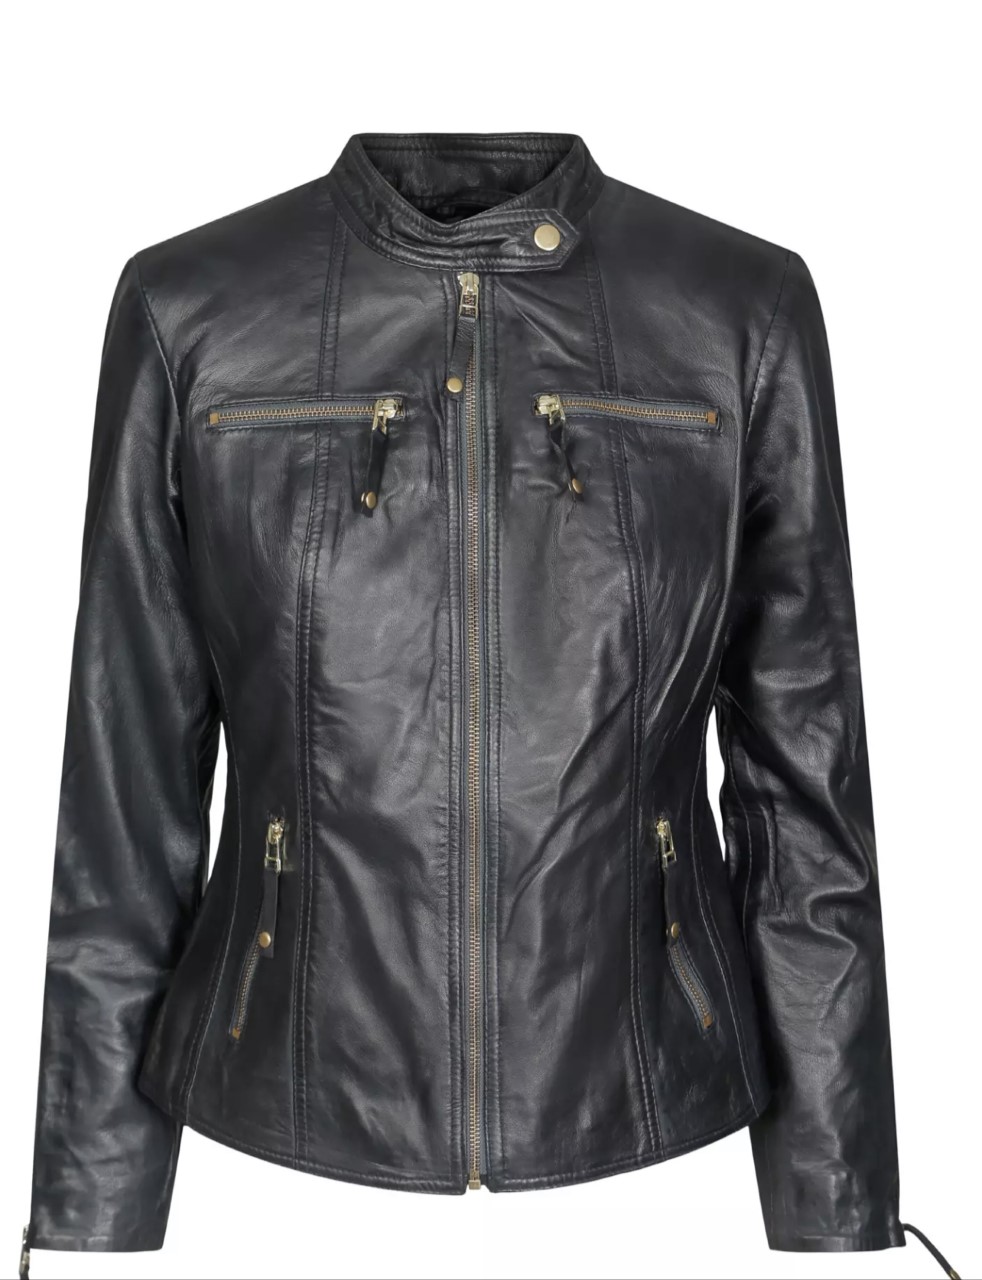 Haust Leather Jacket, Skinnjakke